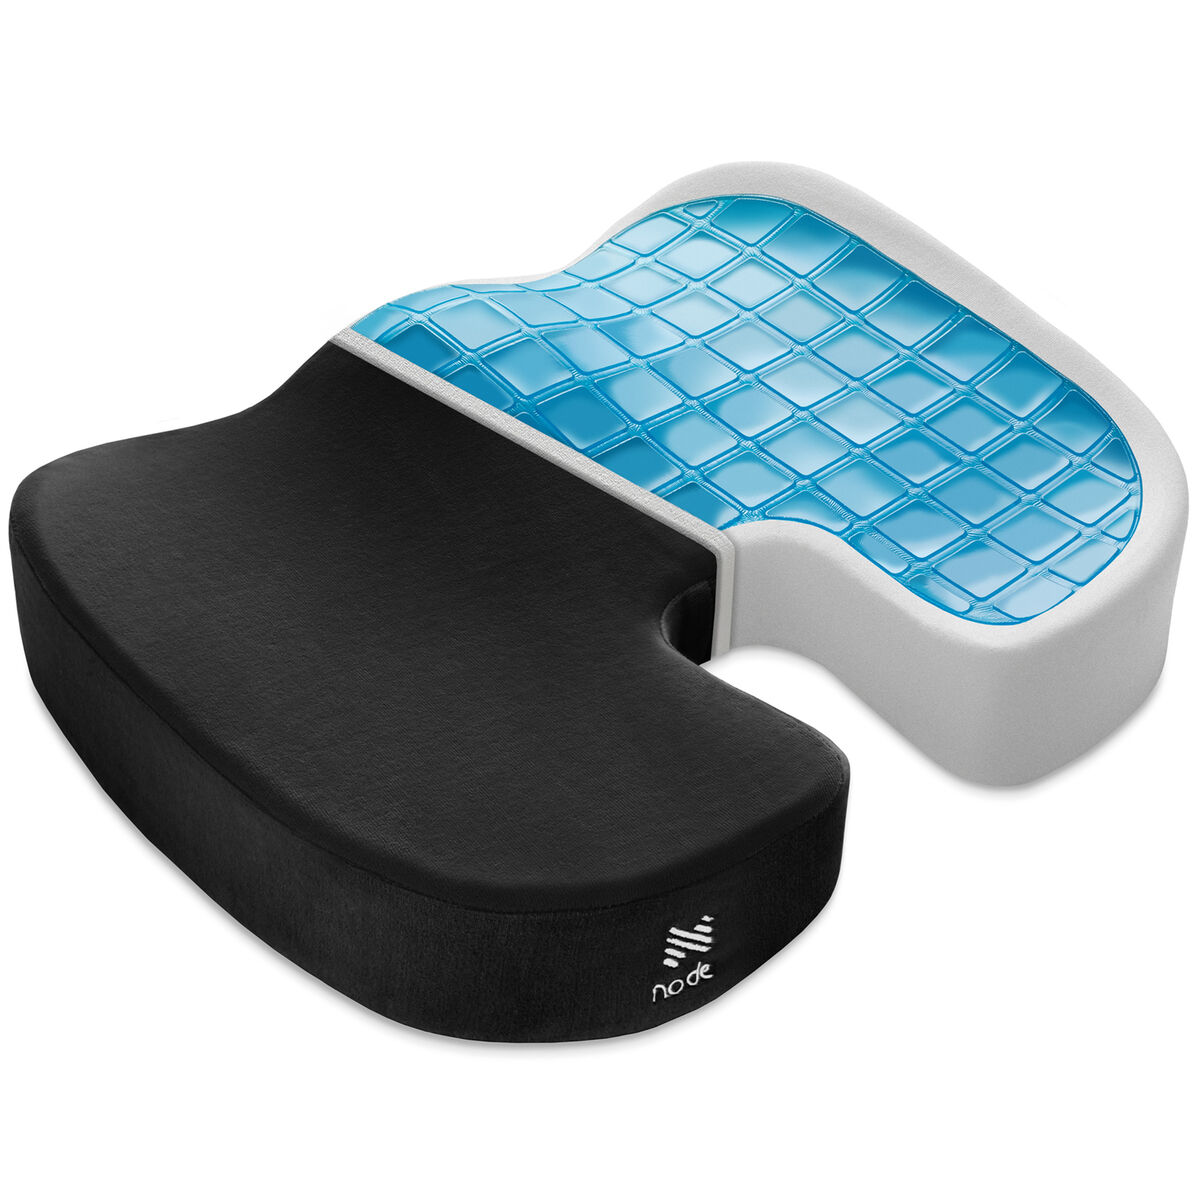 Ergonomic Seat Cushion with Gel-Enhanced Memory Foam Node Color: Black